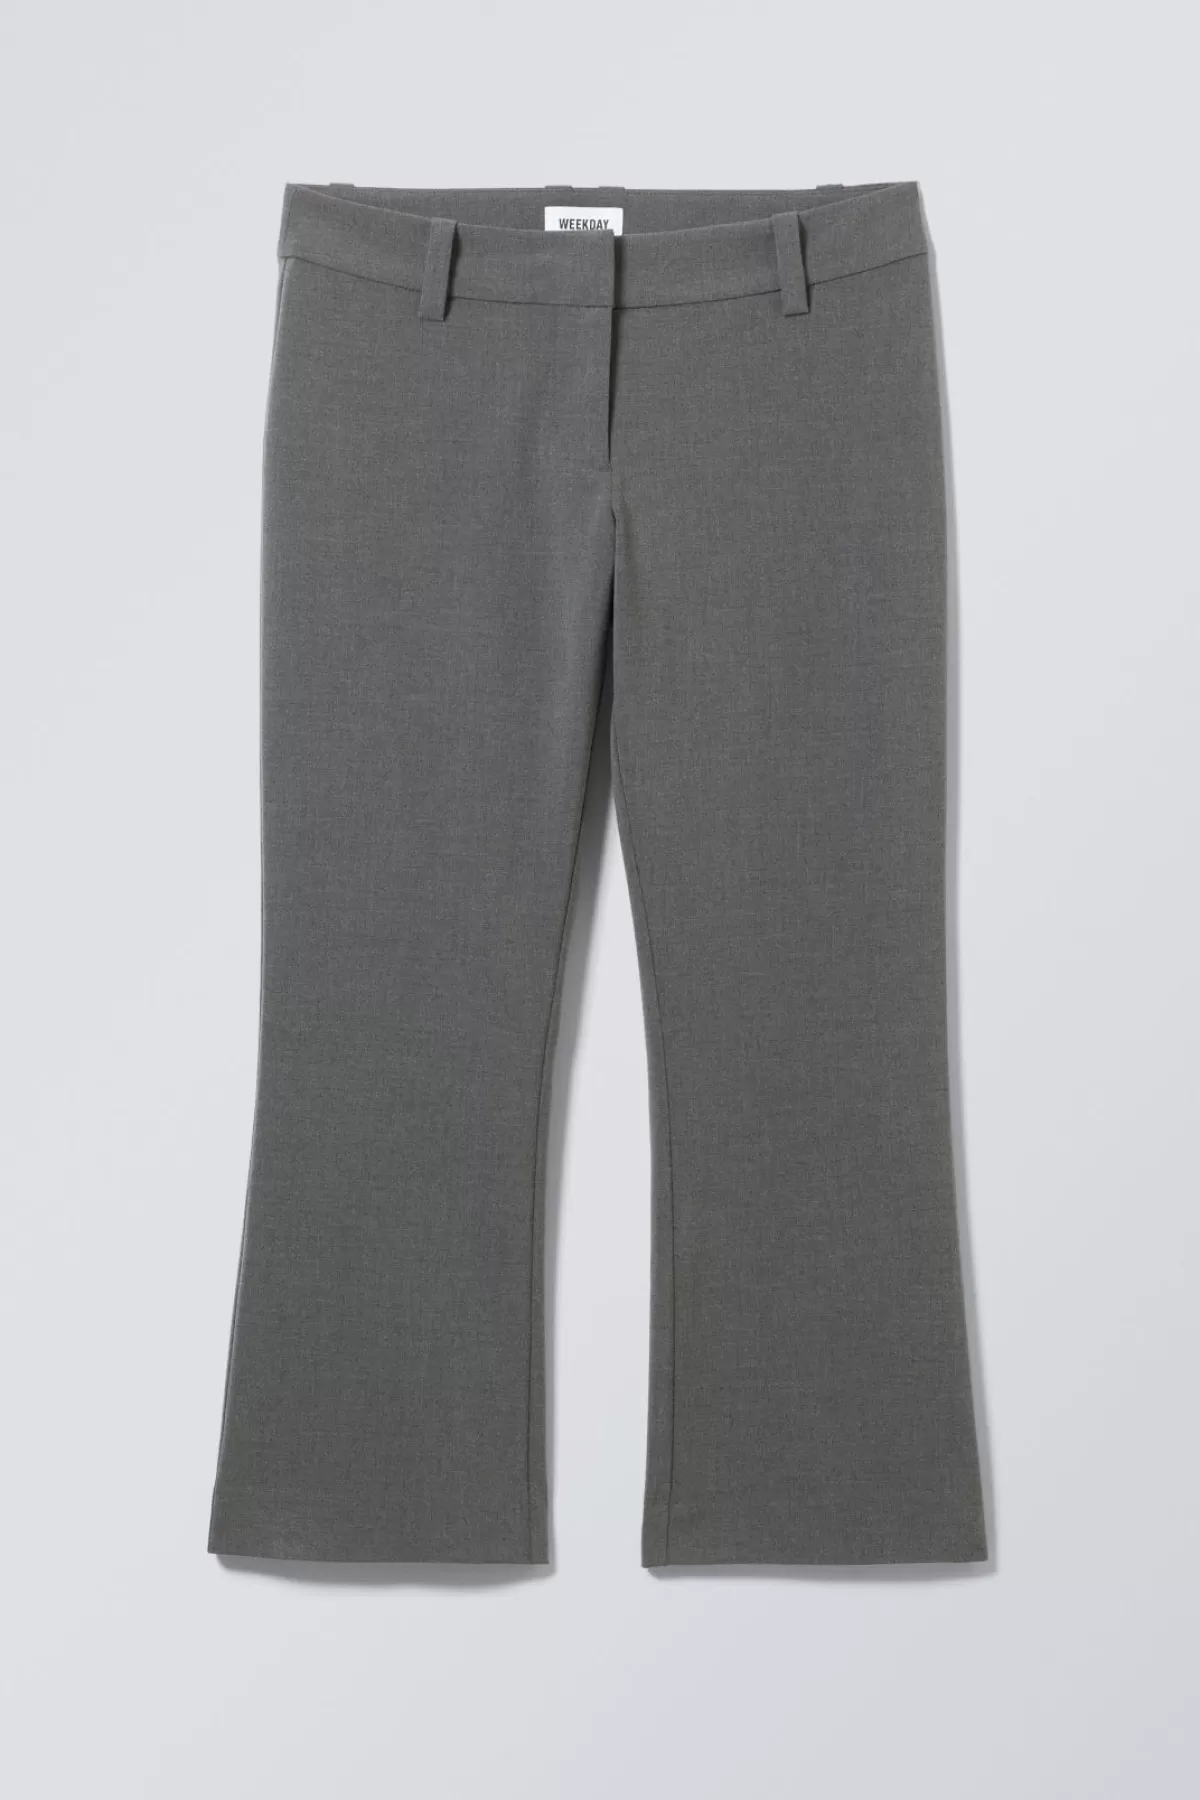 Weekday Slim Fit Capri Trousers Dark Grey Shop